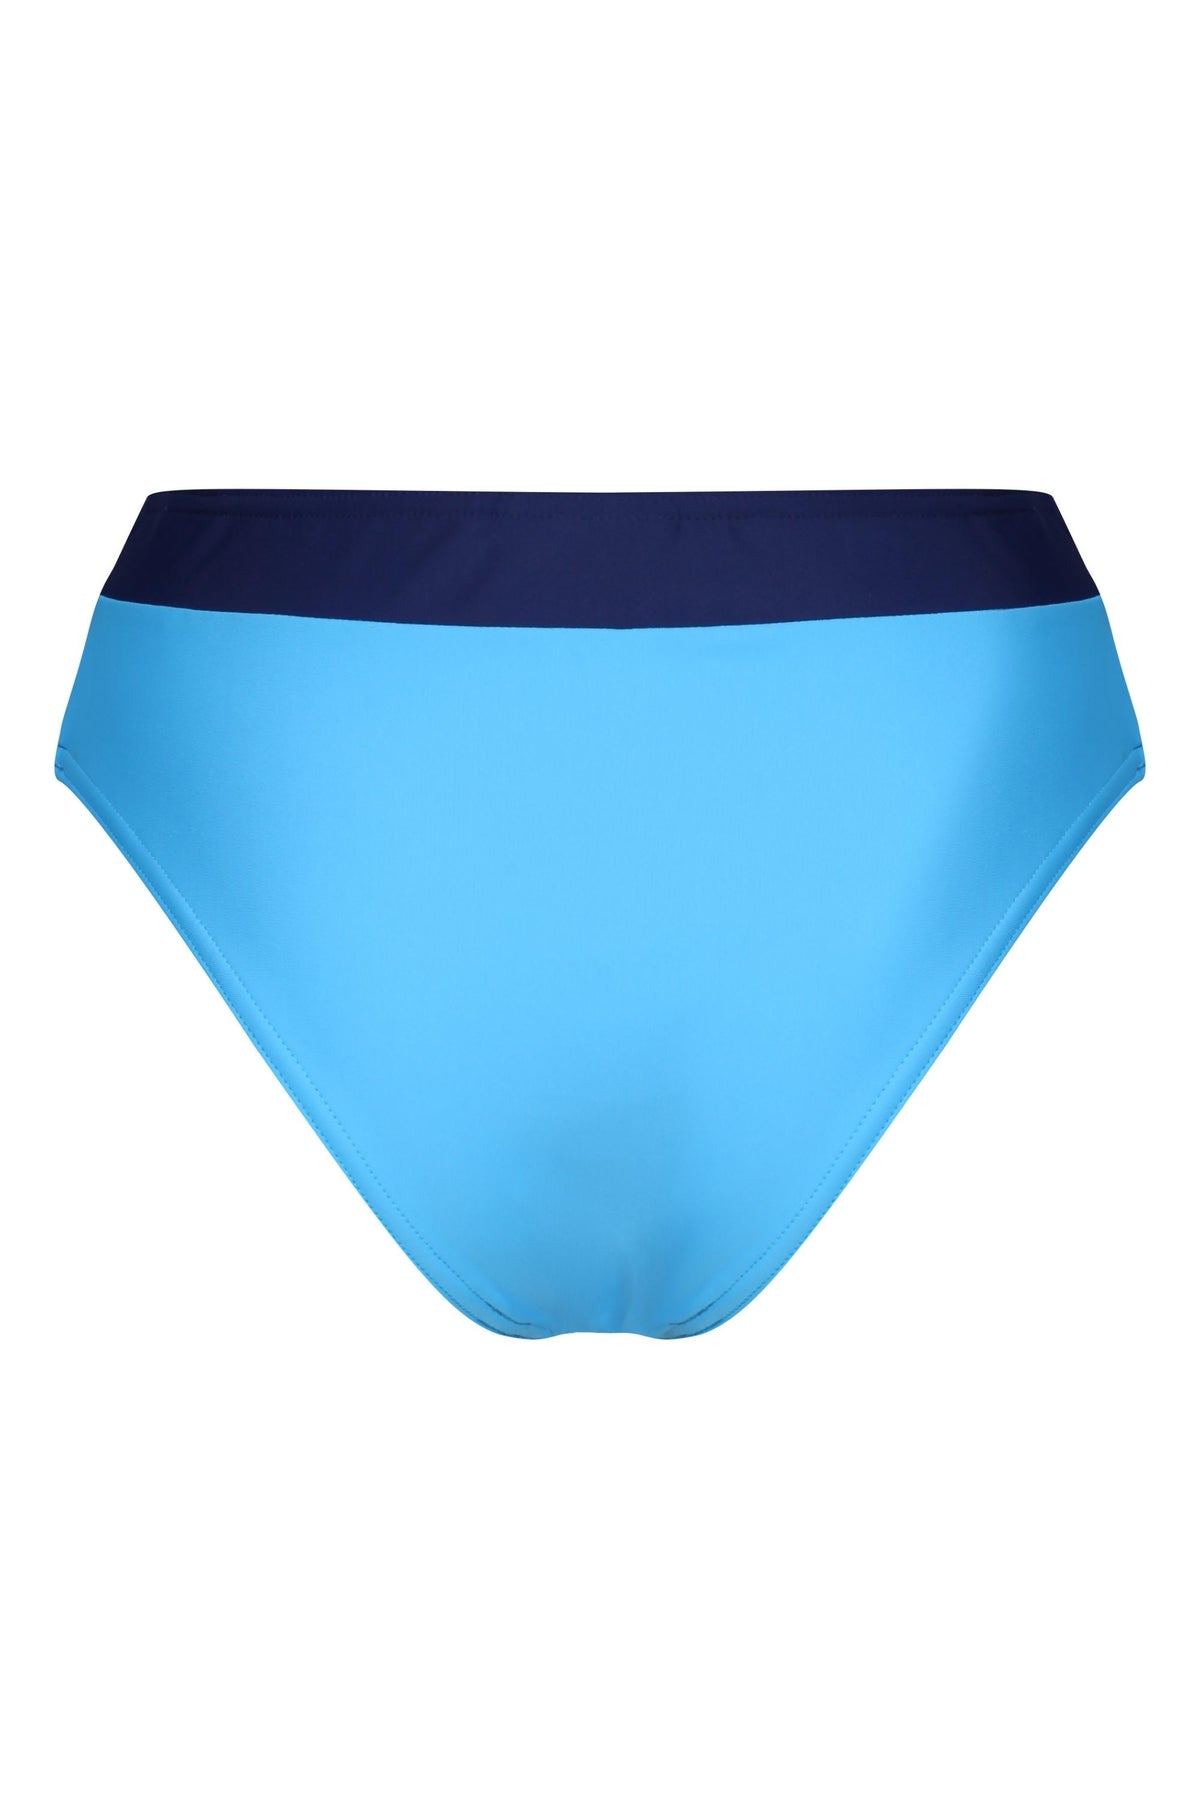 Cannes High Waisted Bikini Bottoms - Blue - Whale Of A Time Clothing